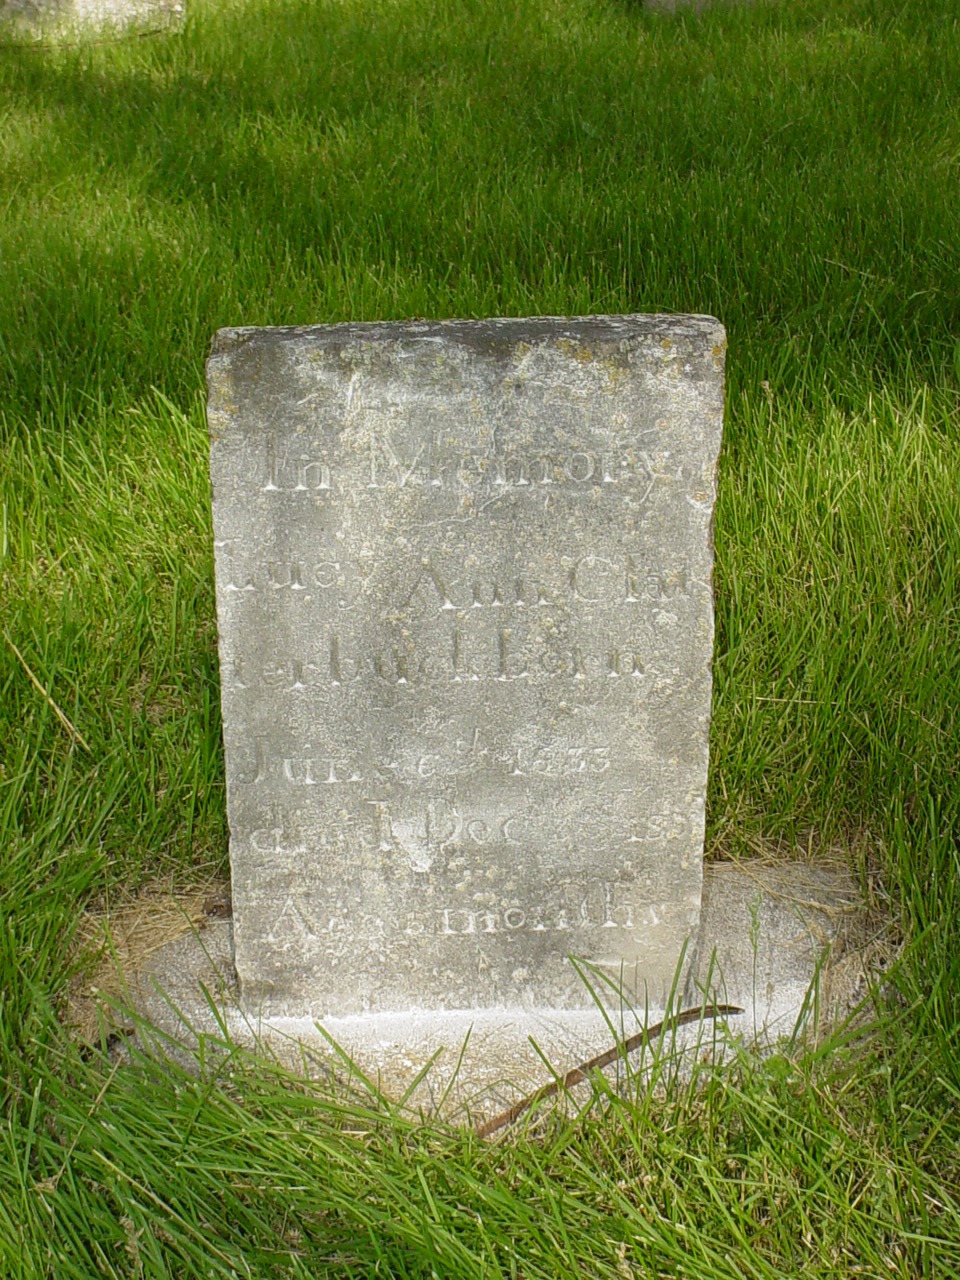  Lucy Ann Clatterbuck Headstone Photo, Old Prospect Methodist Cemetery, Callaway County genealogy